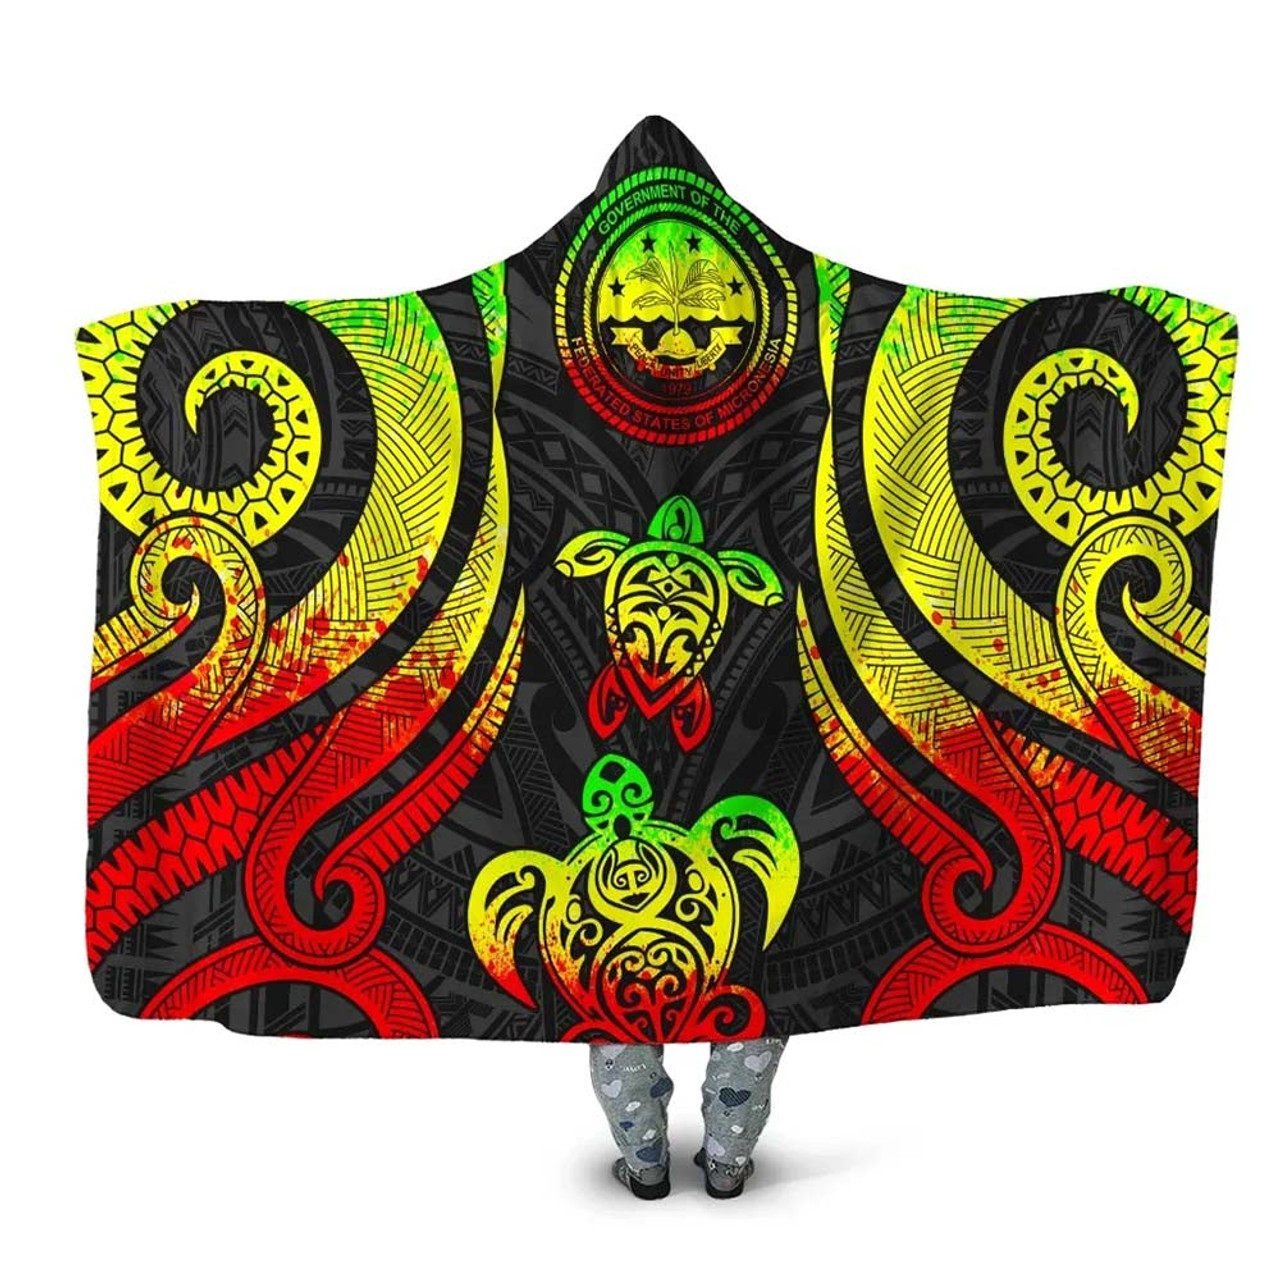 Federated States of Micronesia Hooded Blanket - Reggae Tentacle Turtle 1